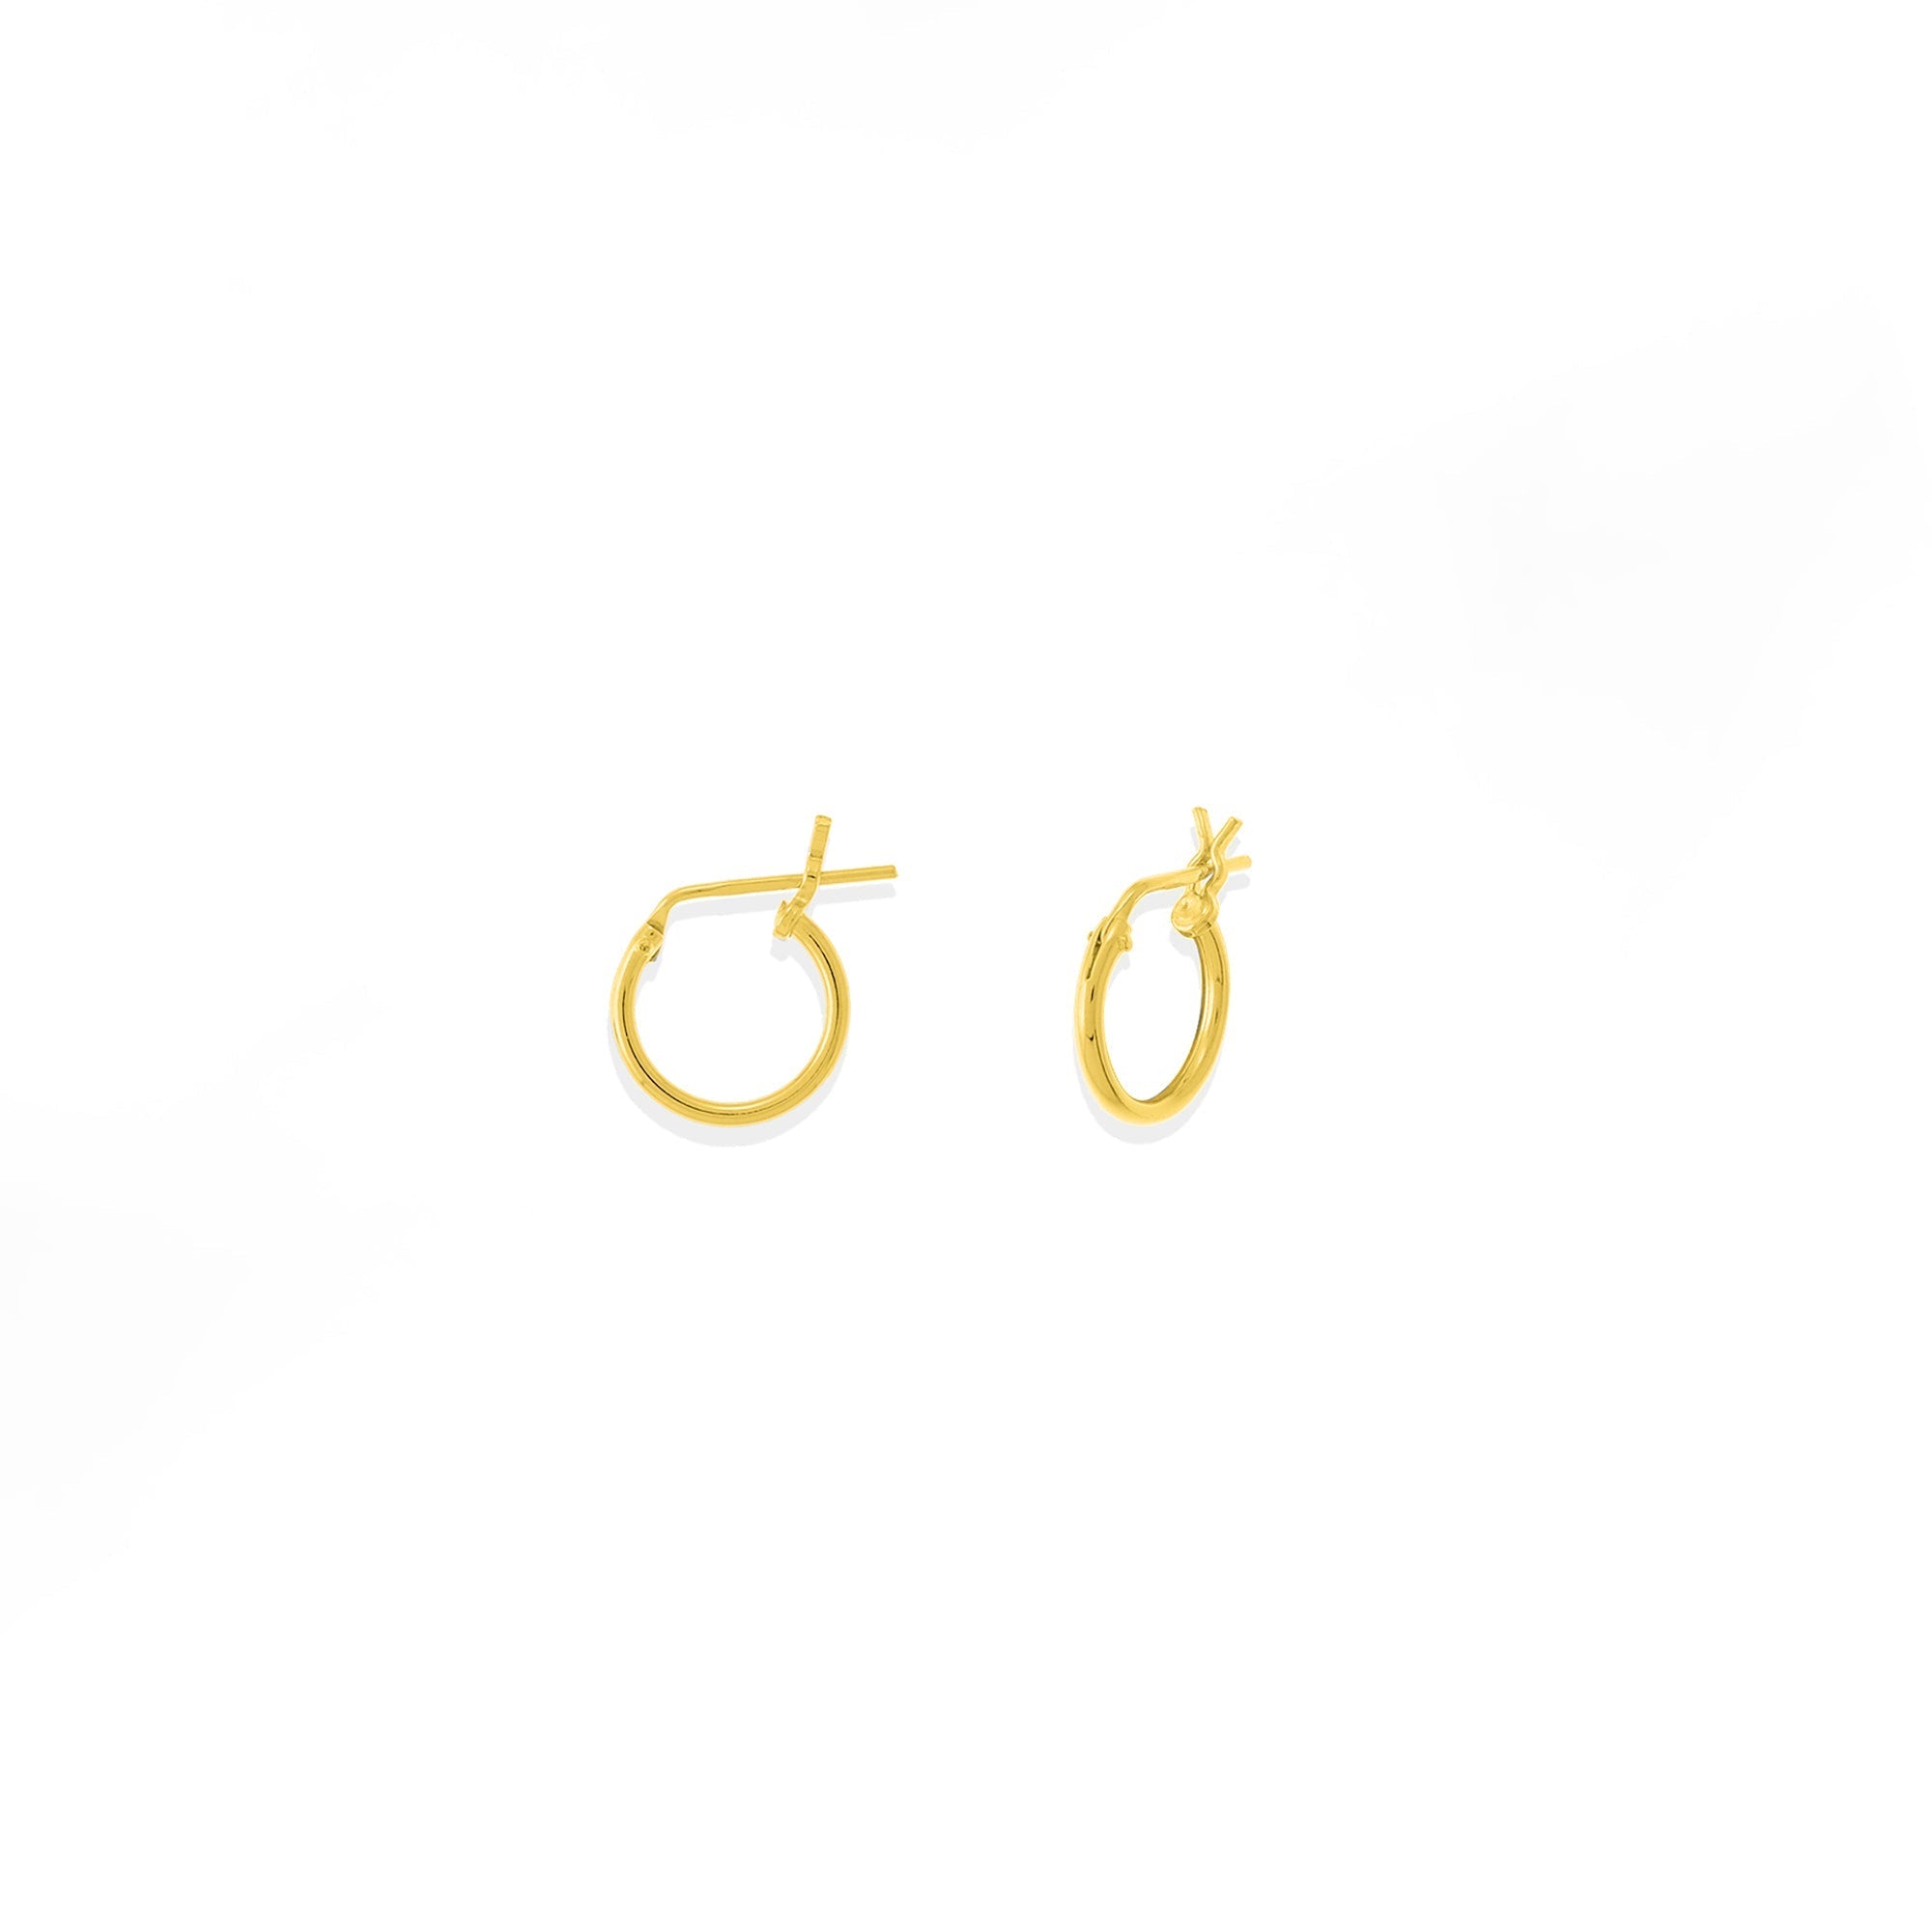 Boma Jewelry Earrings 14K Gold Plated / 0.3" Belle Hoops